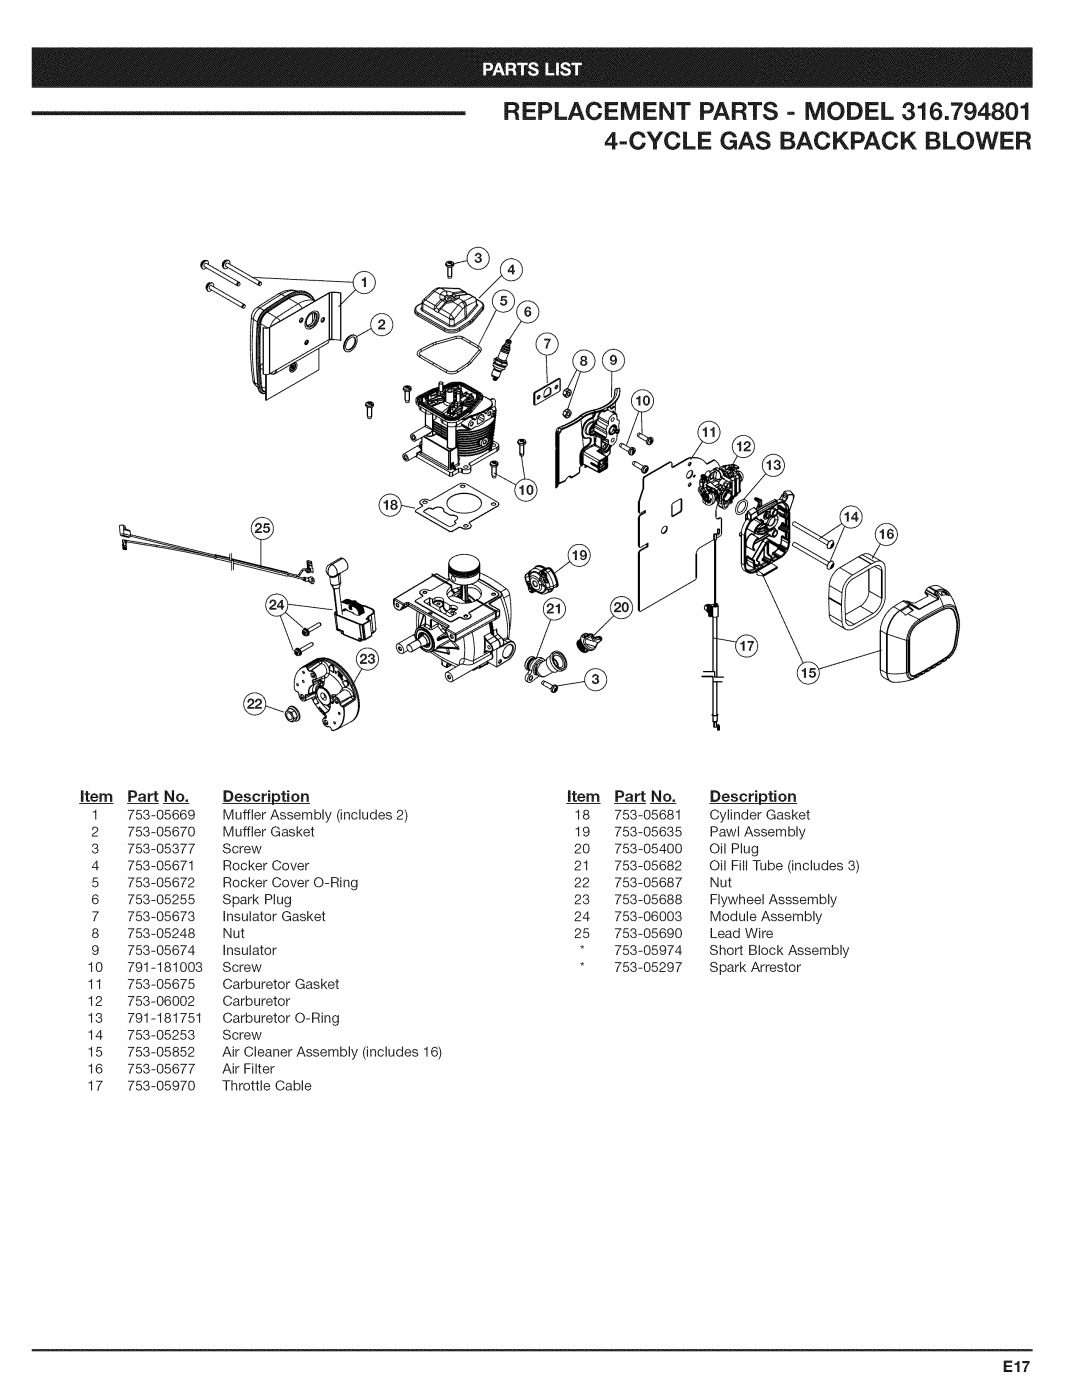 Craftsman 316.794801 manual Replacement Parts - Model, Part No, Description, item 